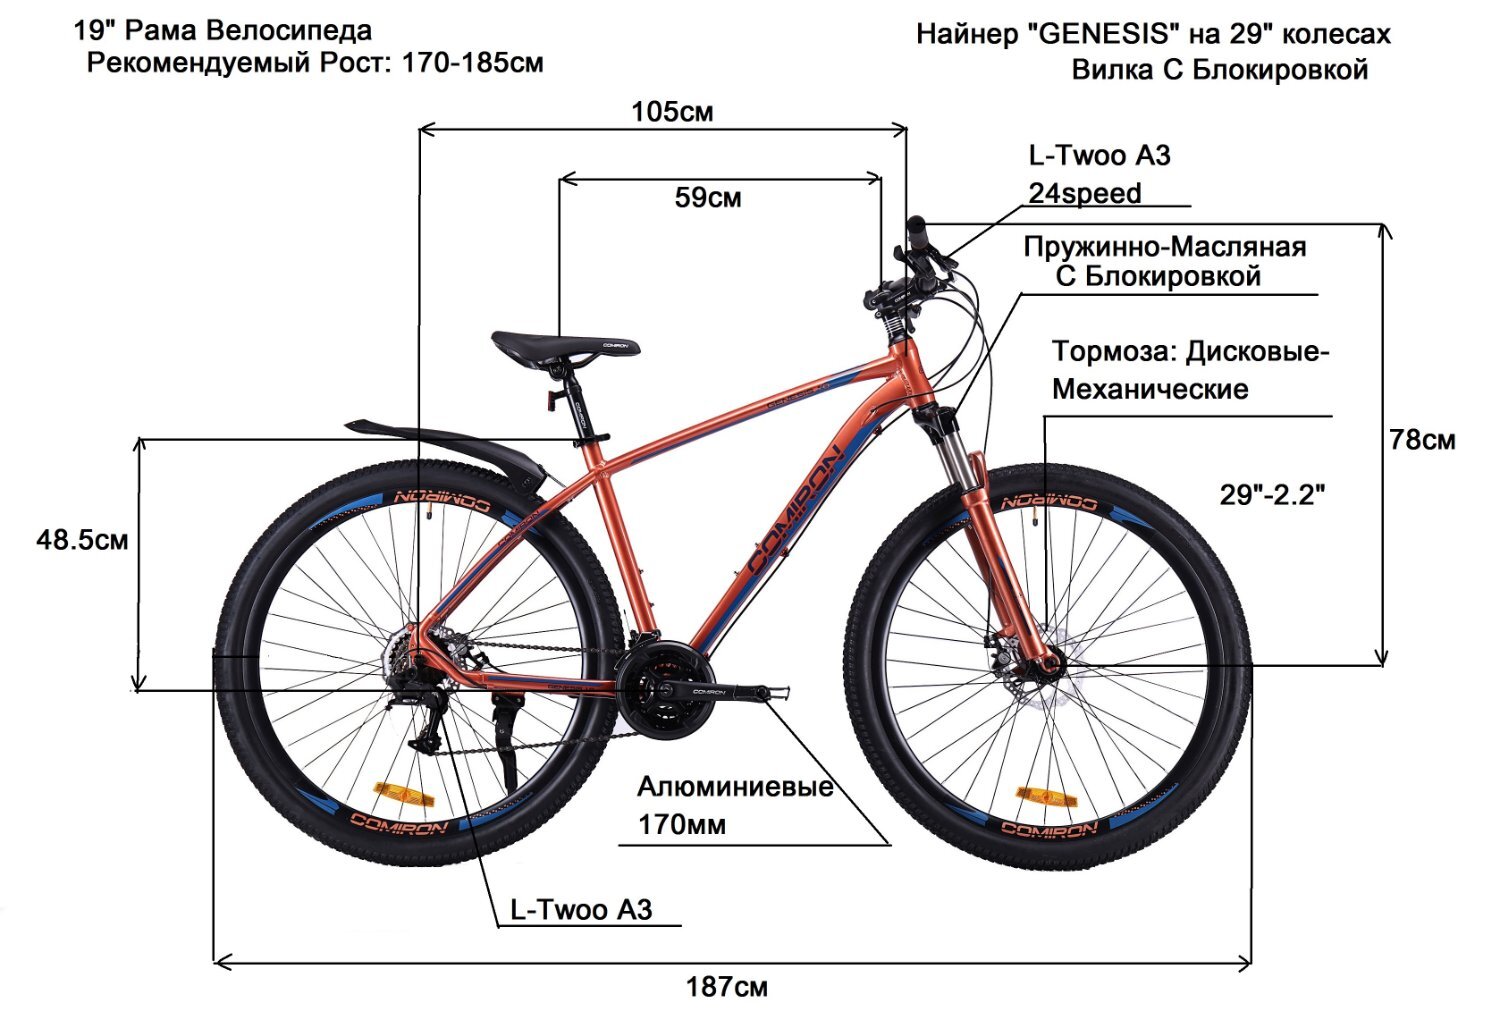 Велосипед 5 лет диаметр колес. Велосипед 19 рама 29 колеса. Габариты велосипеда. Размер велосипеда. Размер колес скоростного велосипеда.